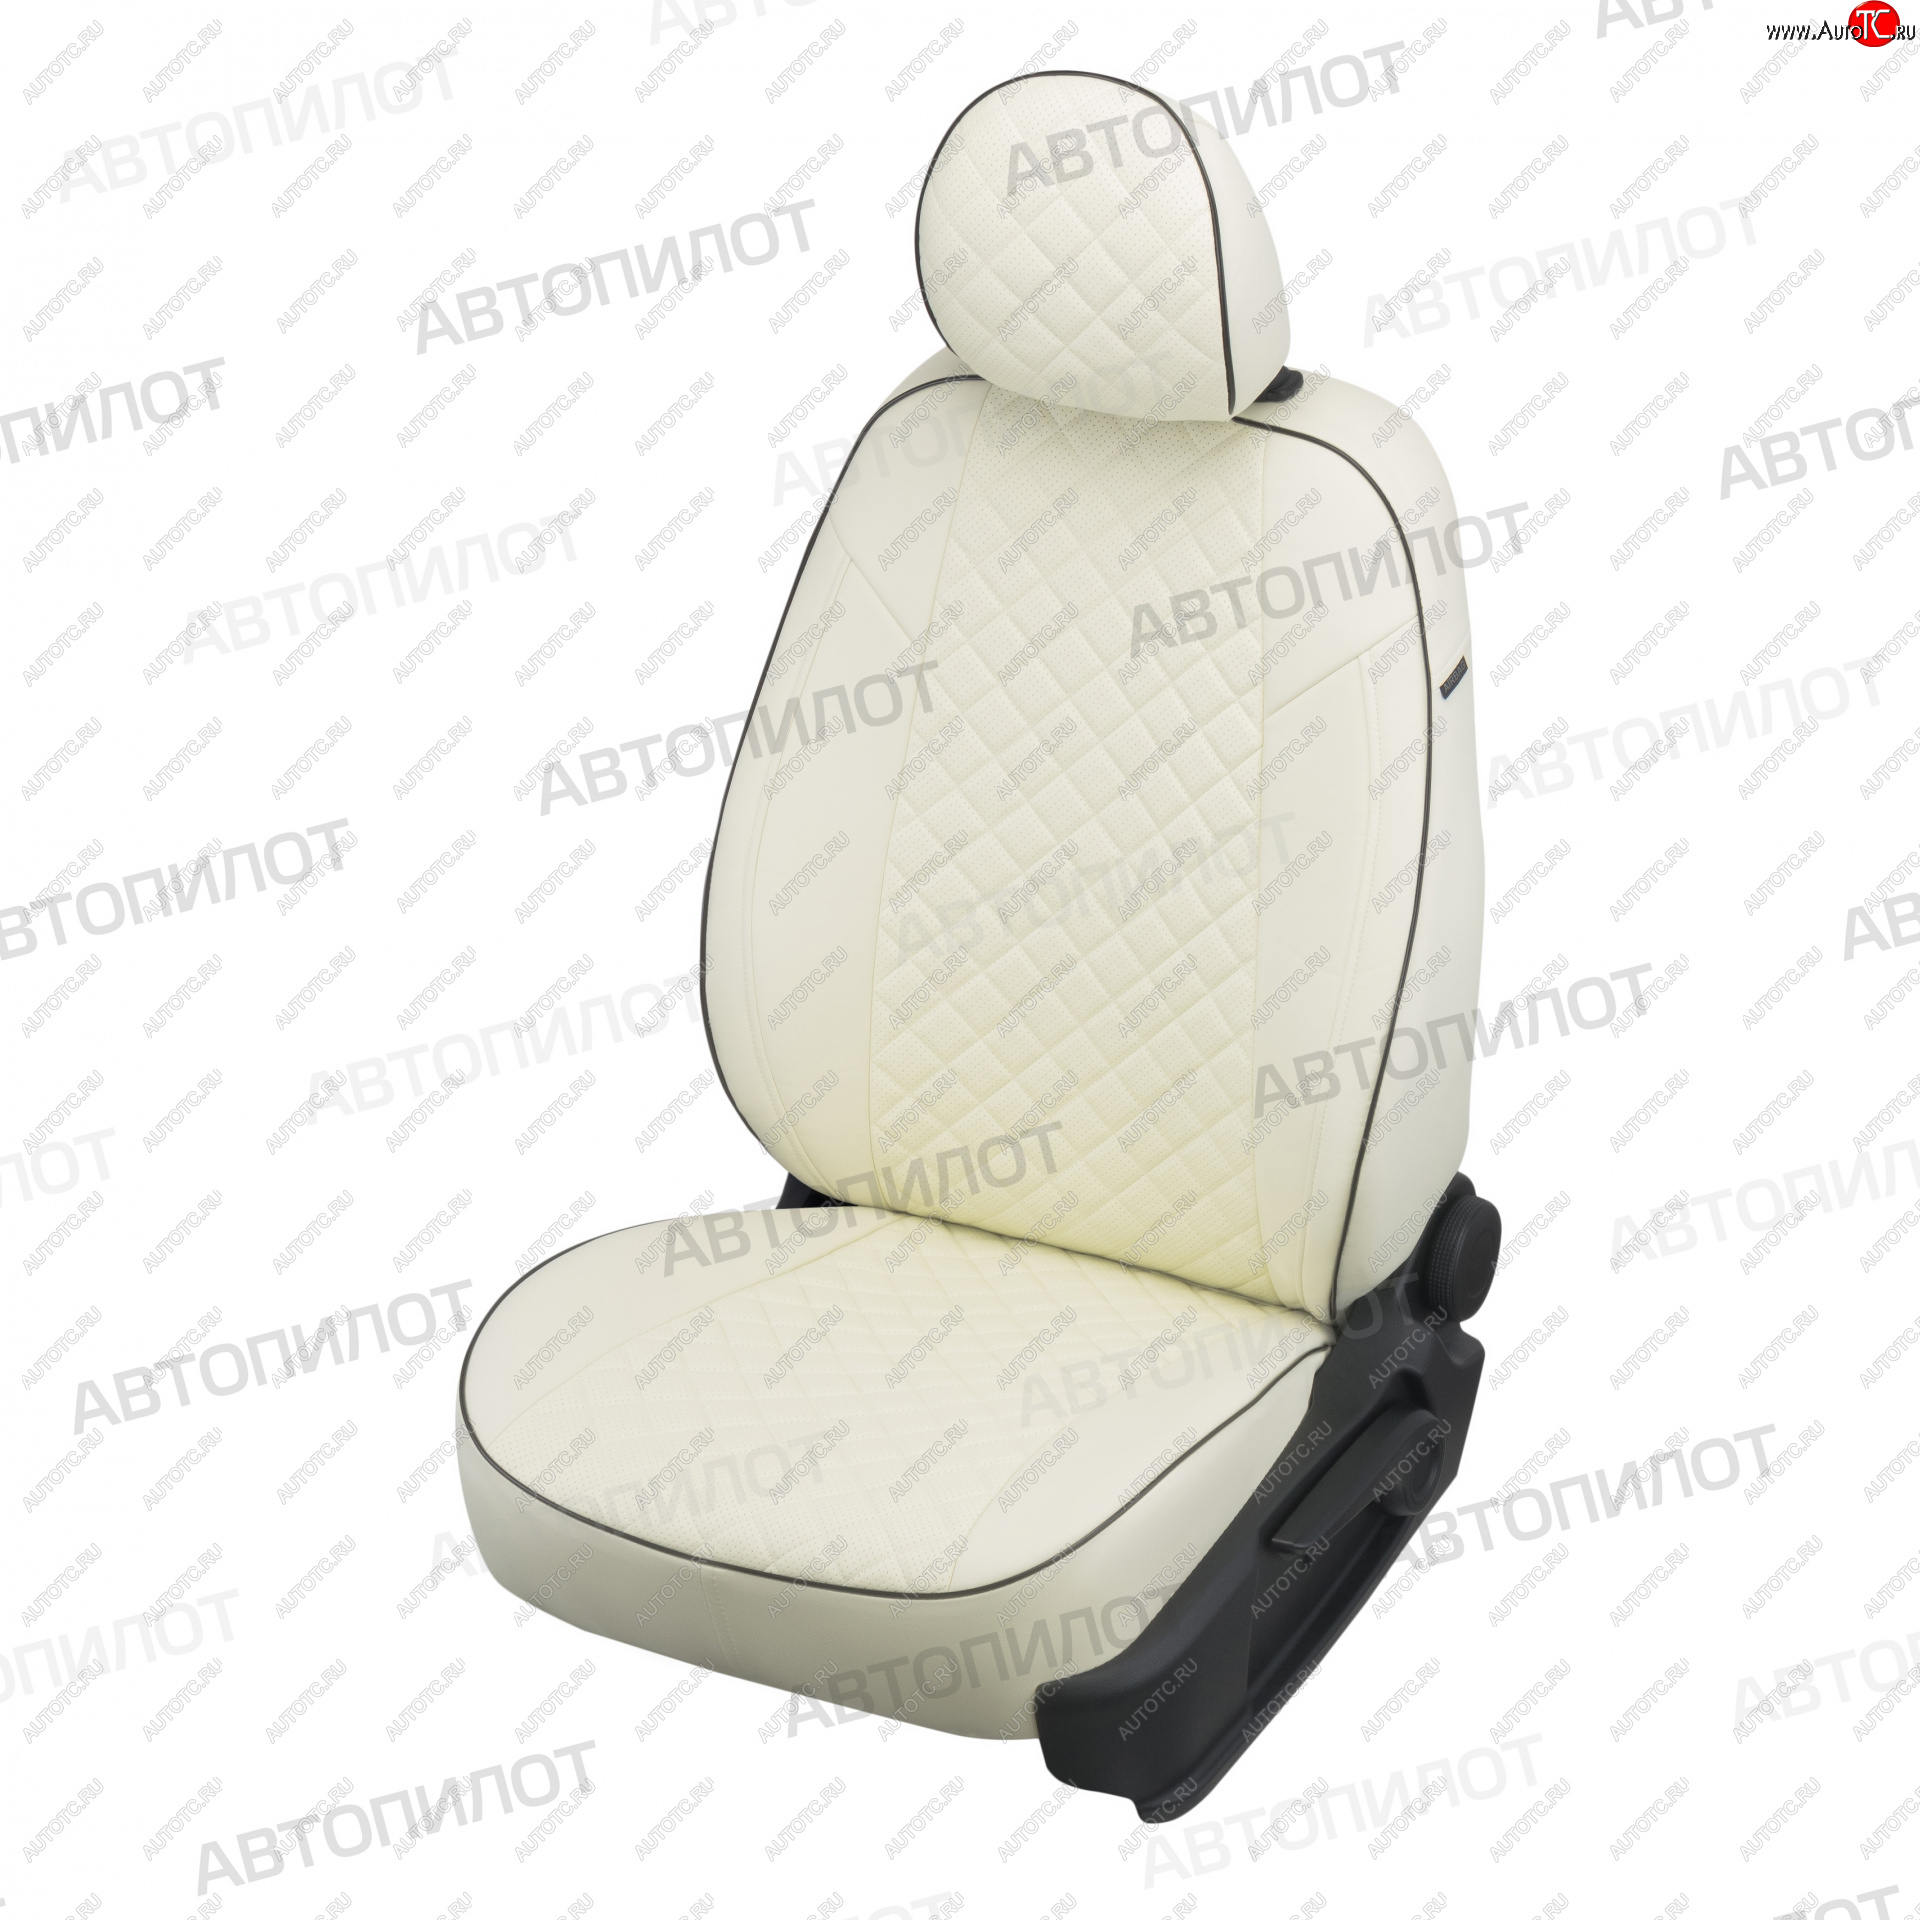 13 999 р. Чехлы сидений (5 мест, экокожа) Автопилот Ромб  Ford Galaxy  WGR (1995-2006) (белый)